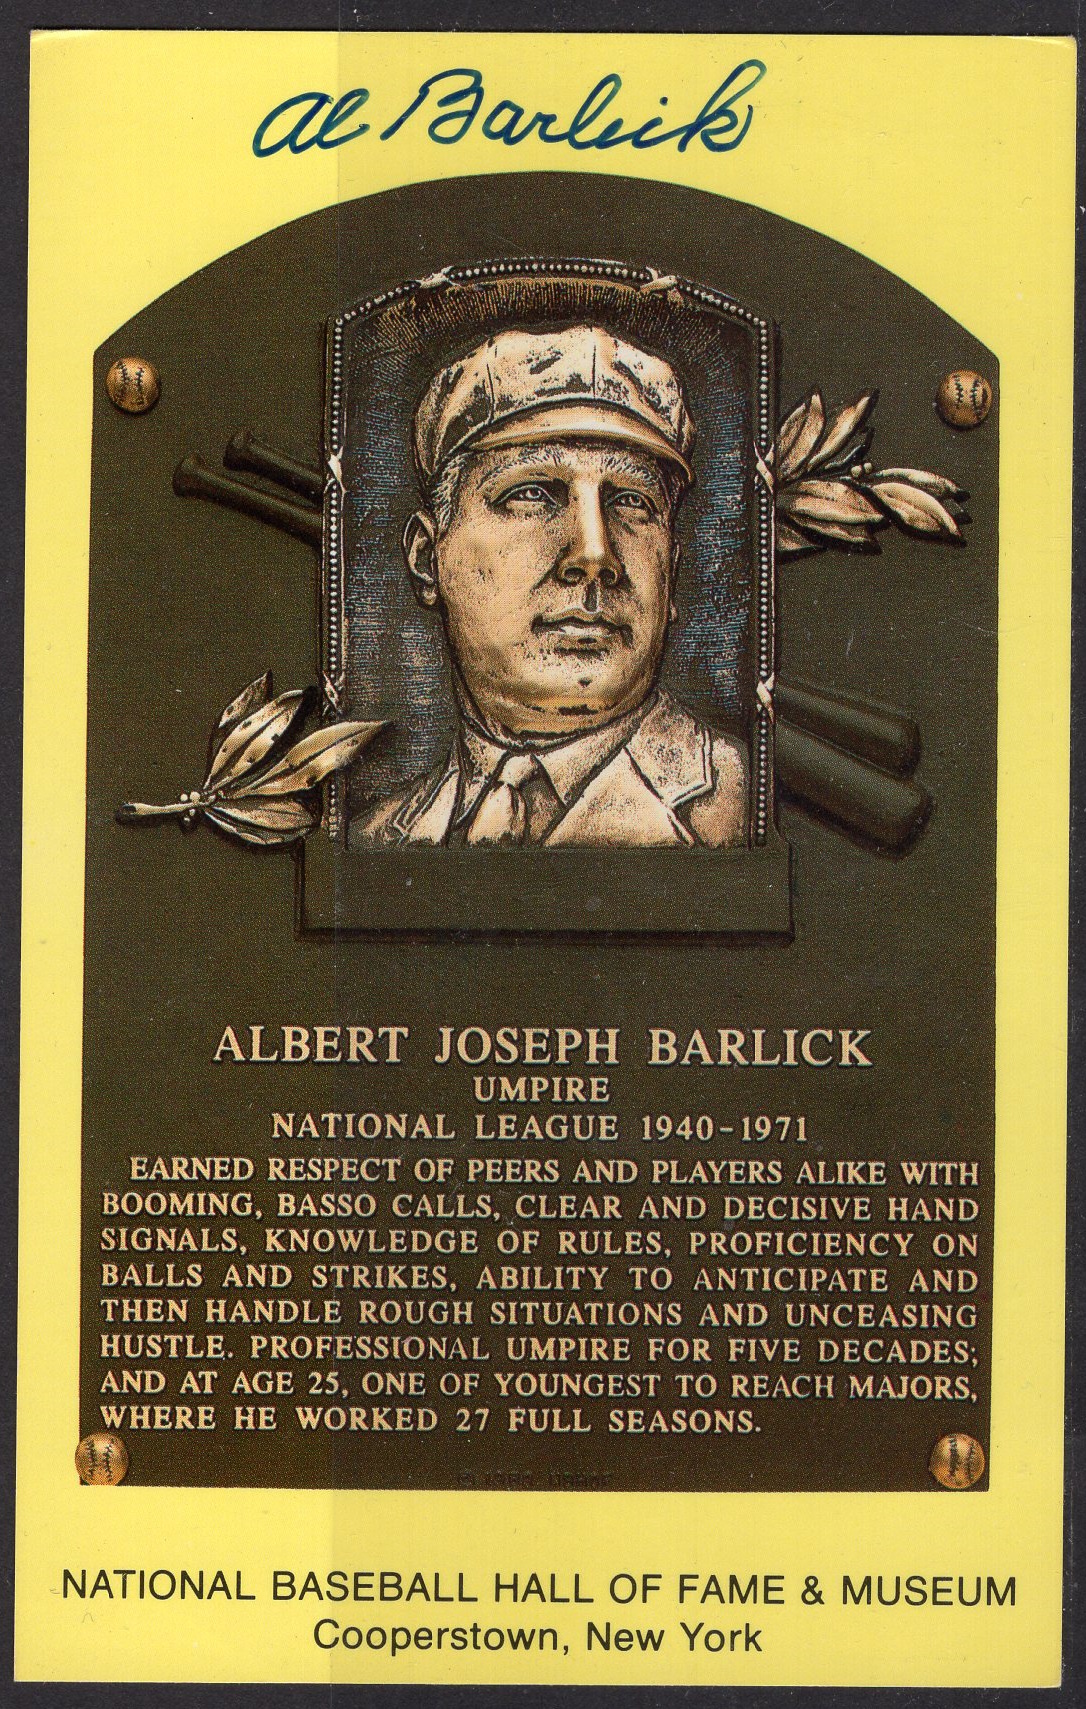 Al Barlick plaque